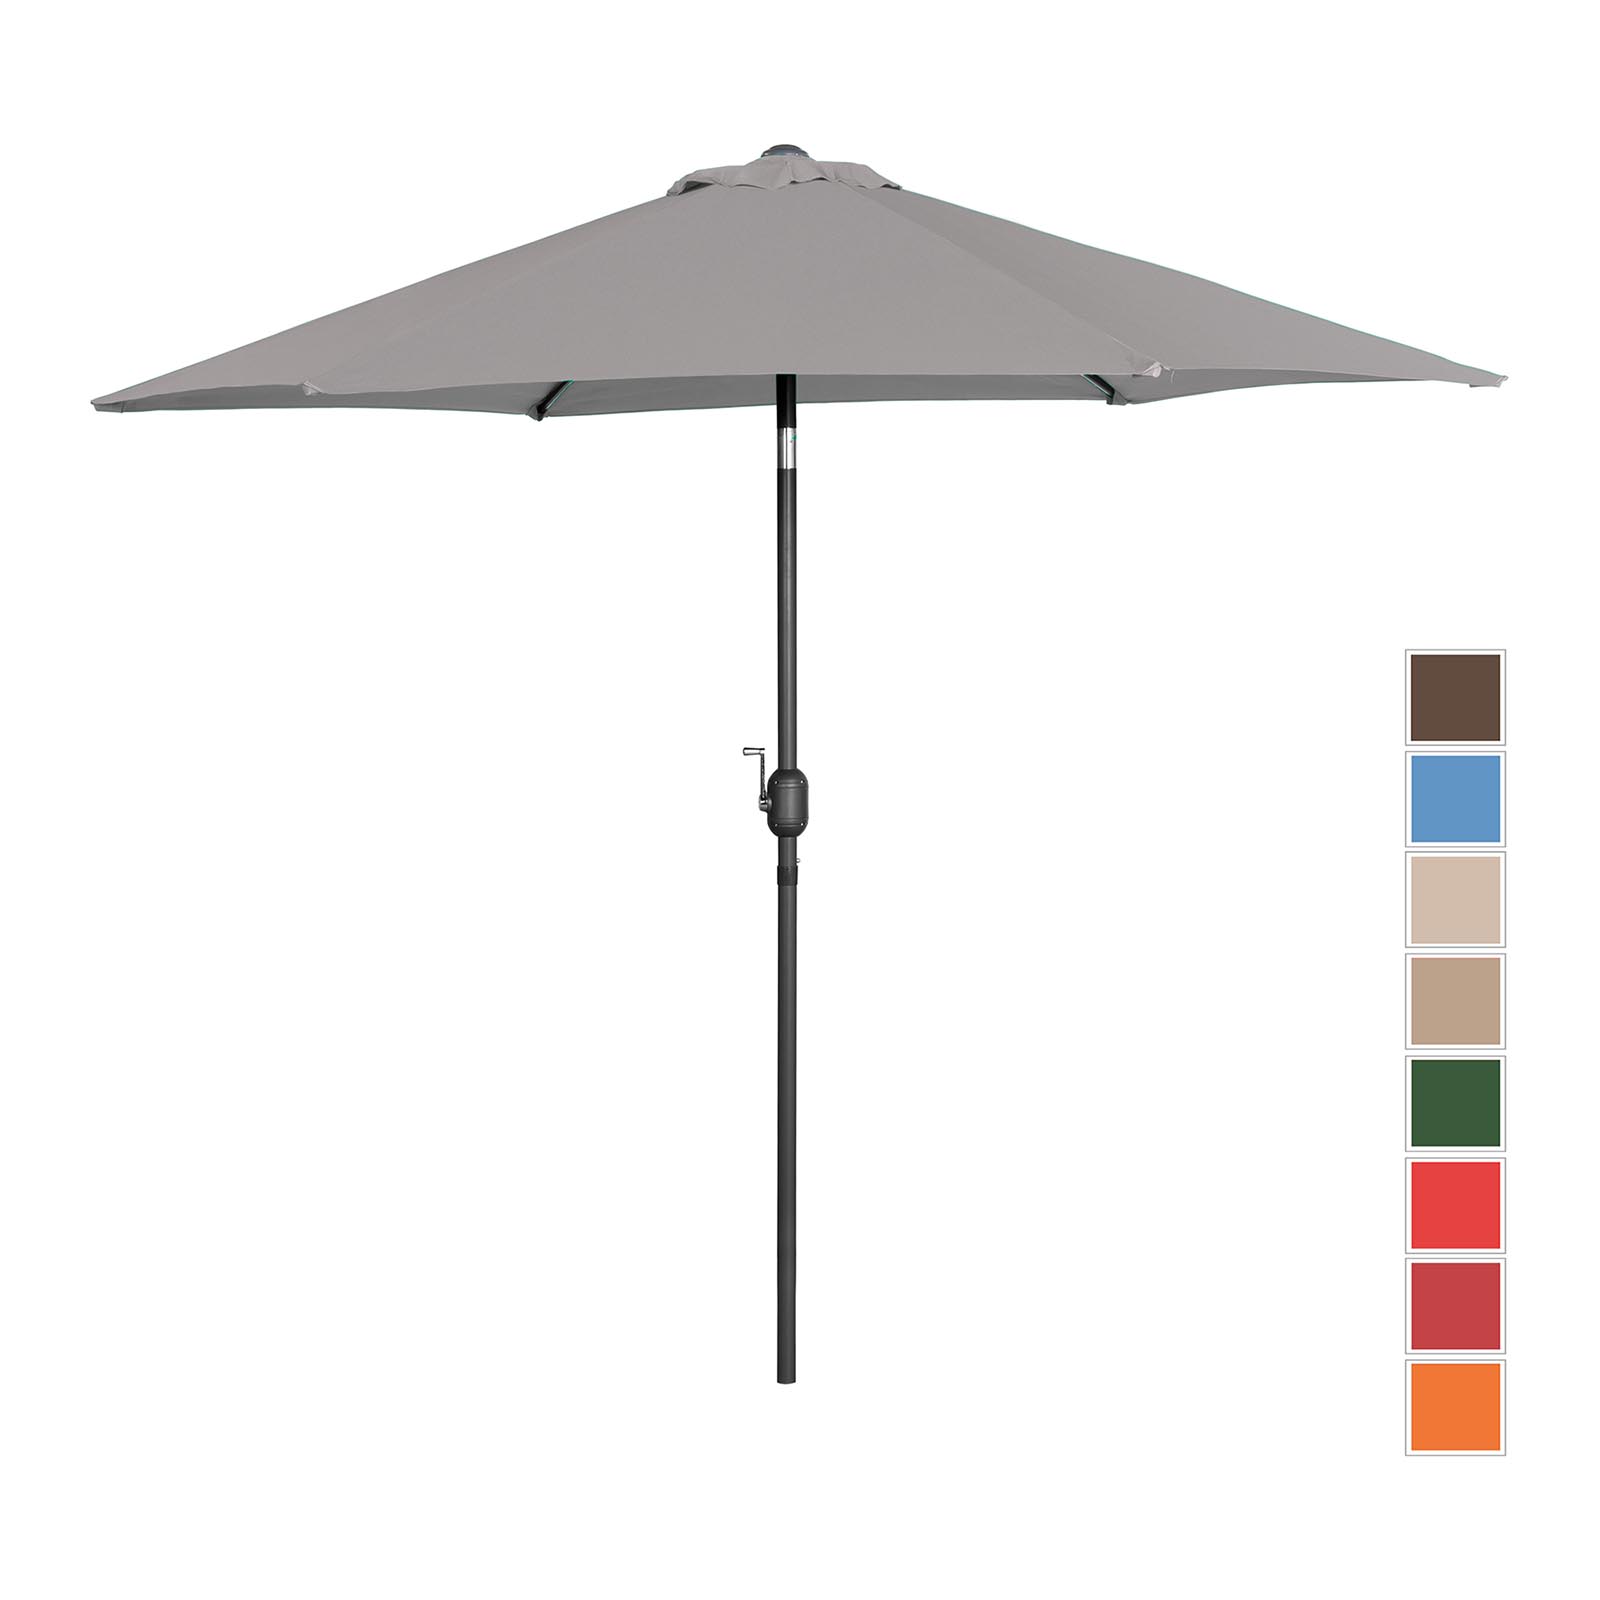 Large Outdoor Umbrella - dark grey - hexagonal - Ø 300 cm - tiltable